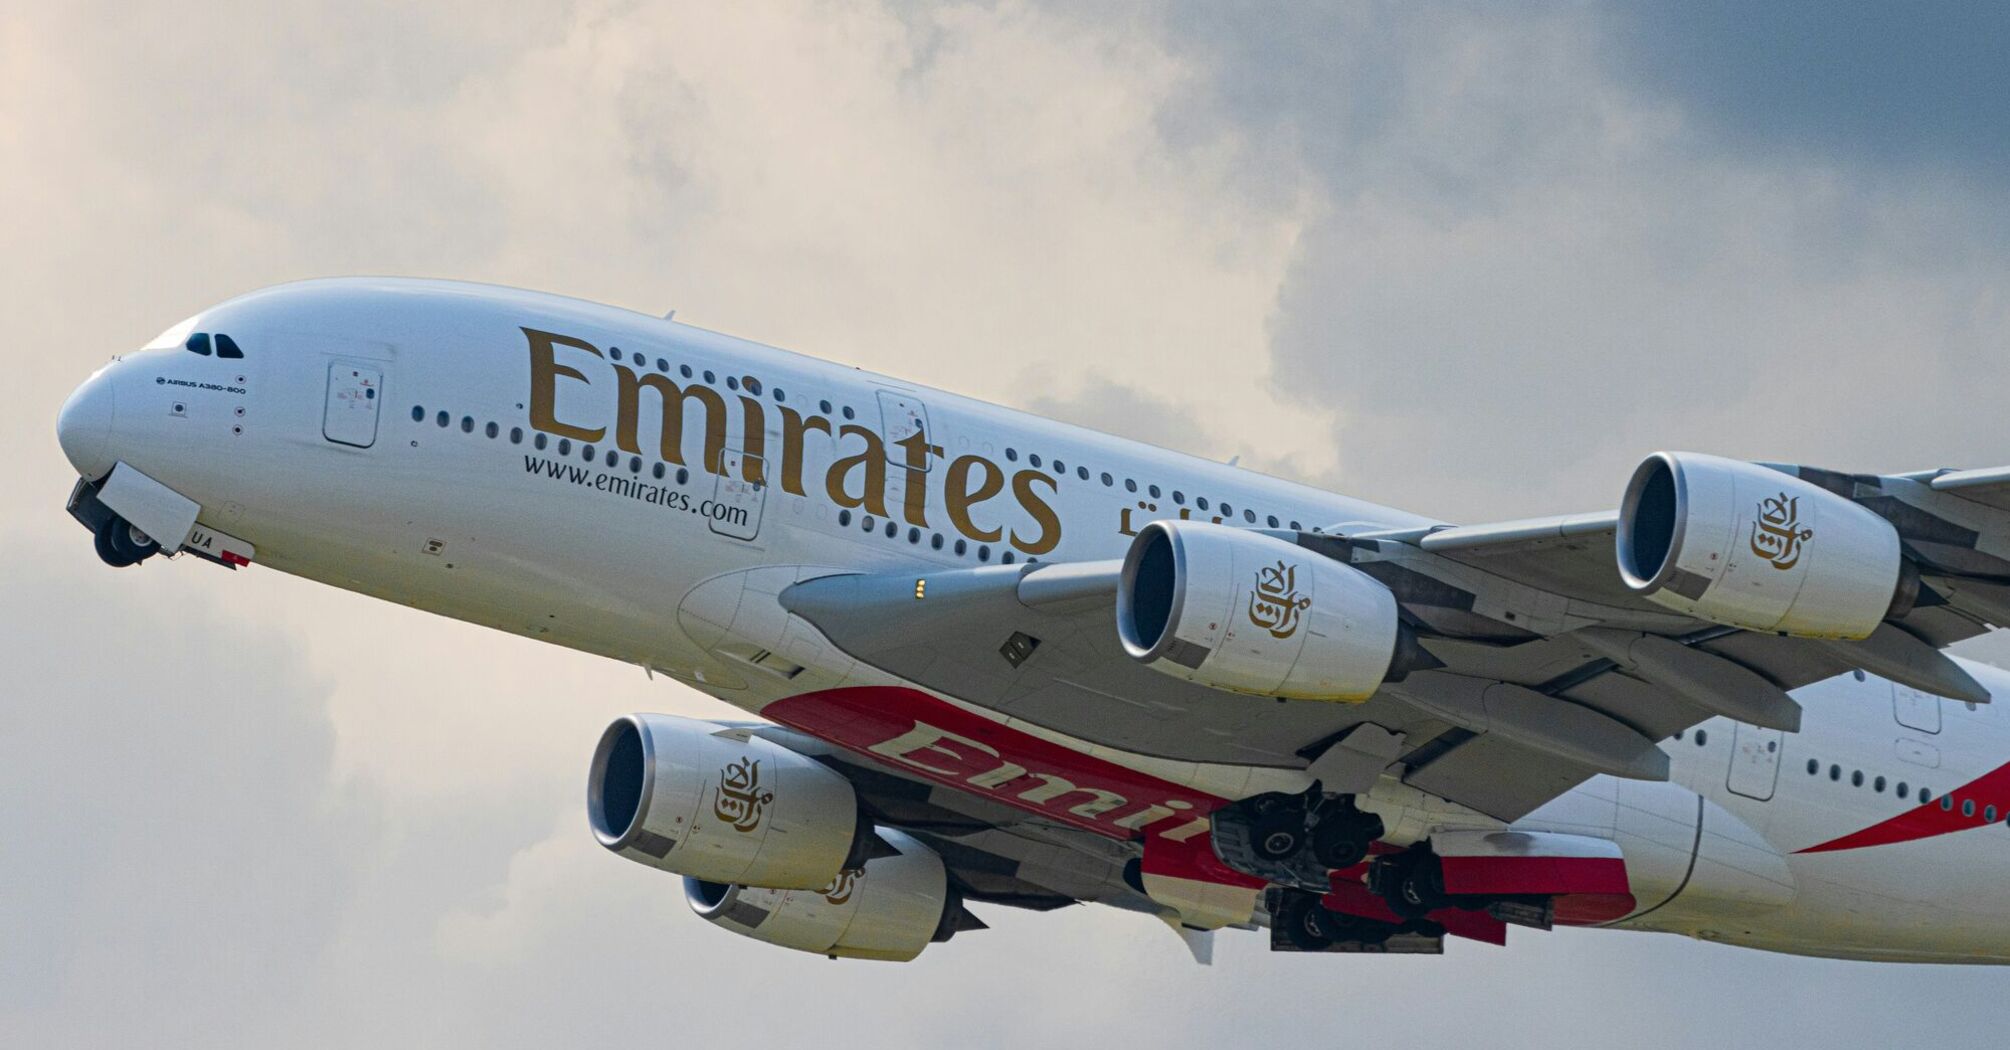 Emirates airplane in flight